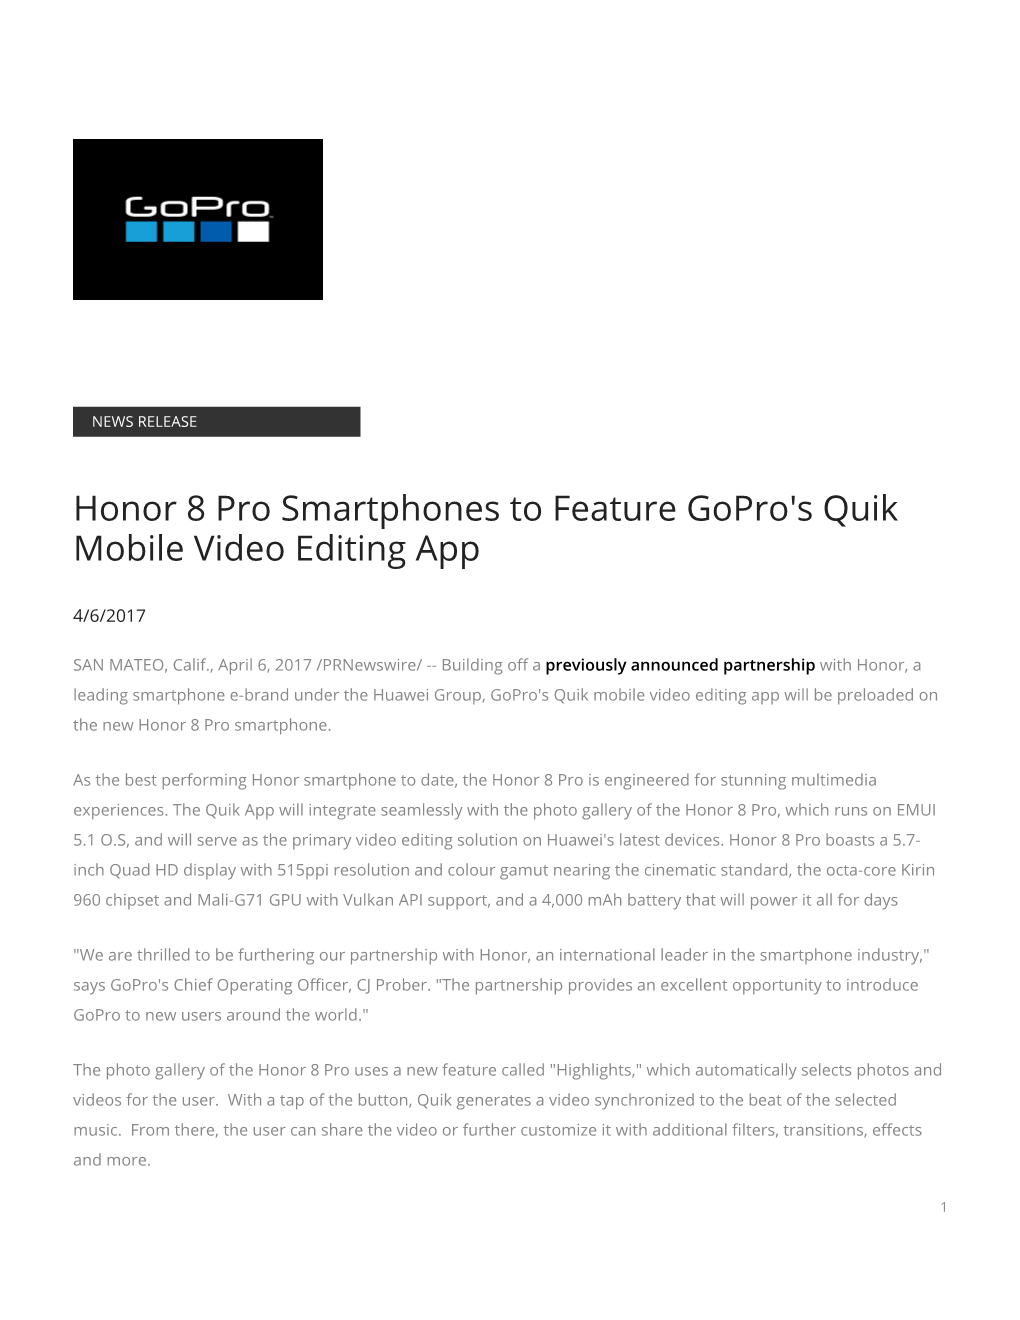 Honor 8 Pro Smartphones to Feature Gopro's Quik Mobile Video Editing App